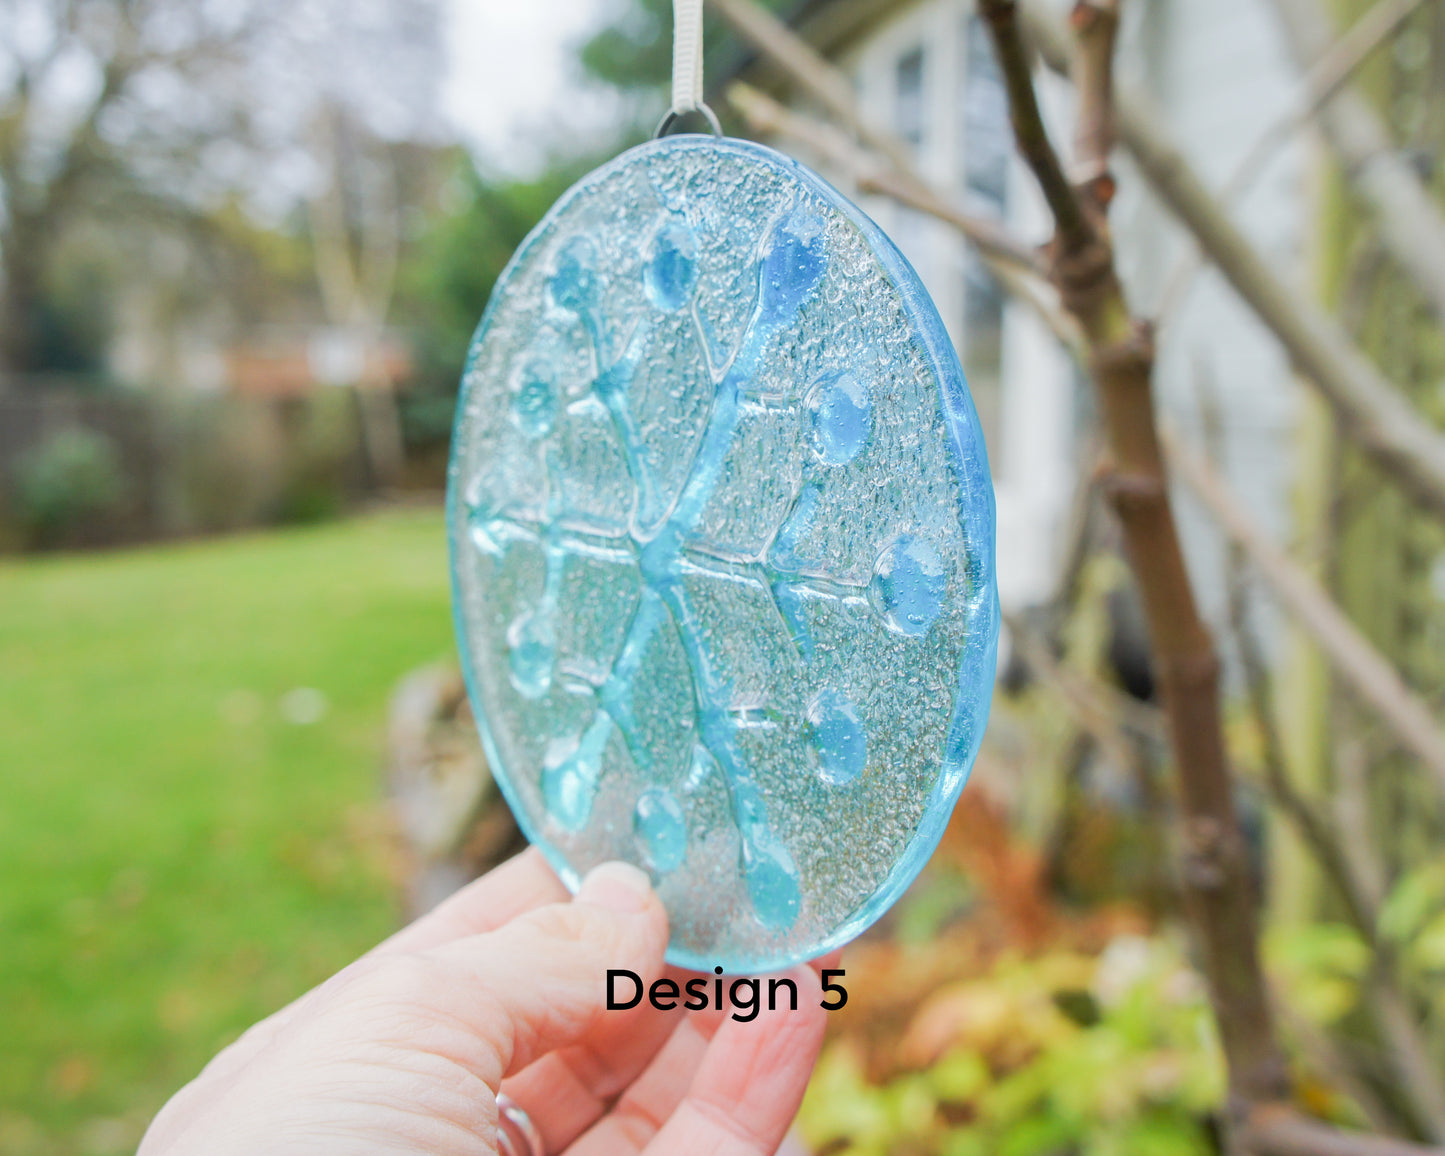 Snowflake Suncatcher Turquoise Design 5 - 12cm(5")